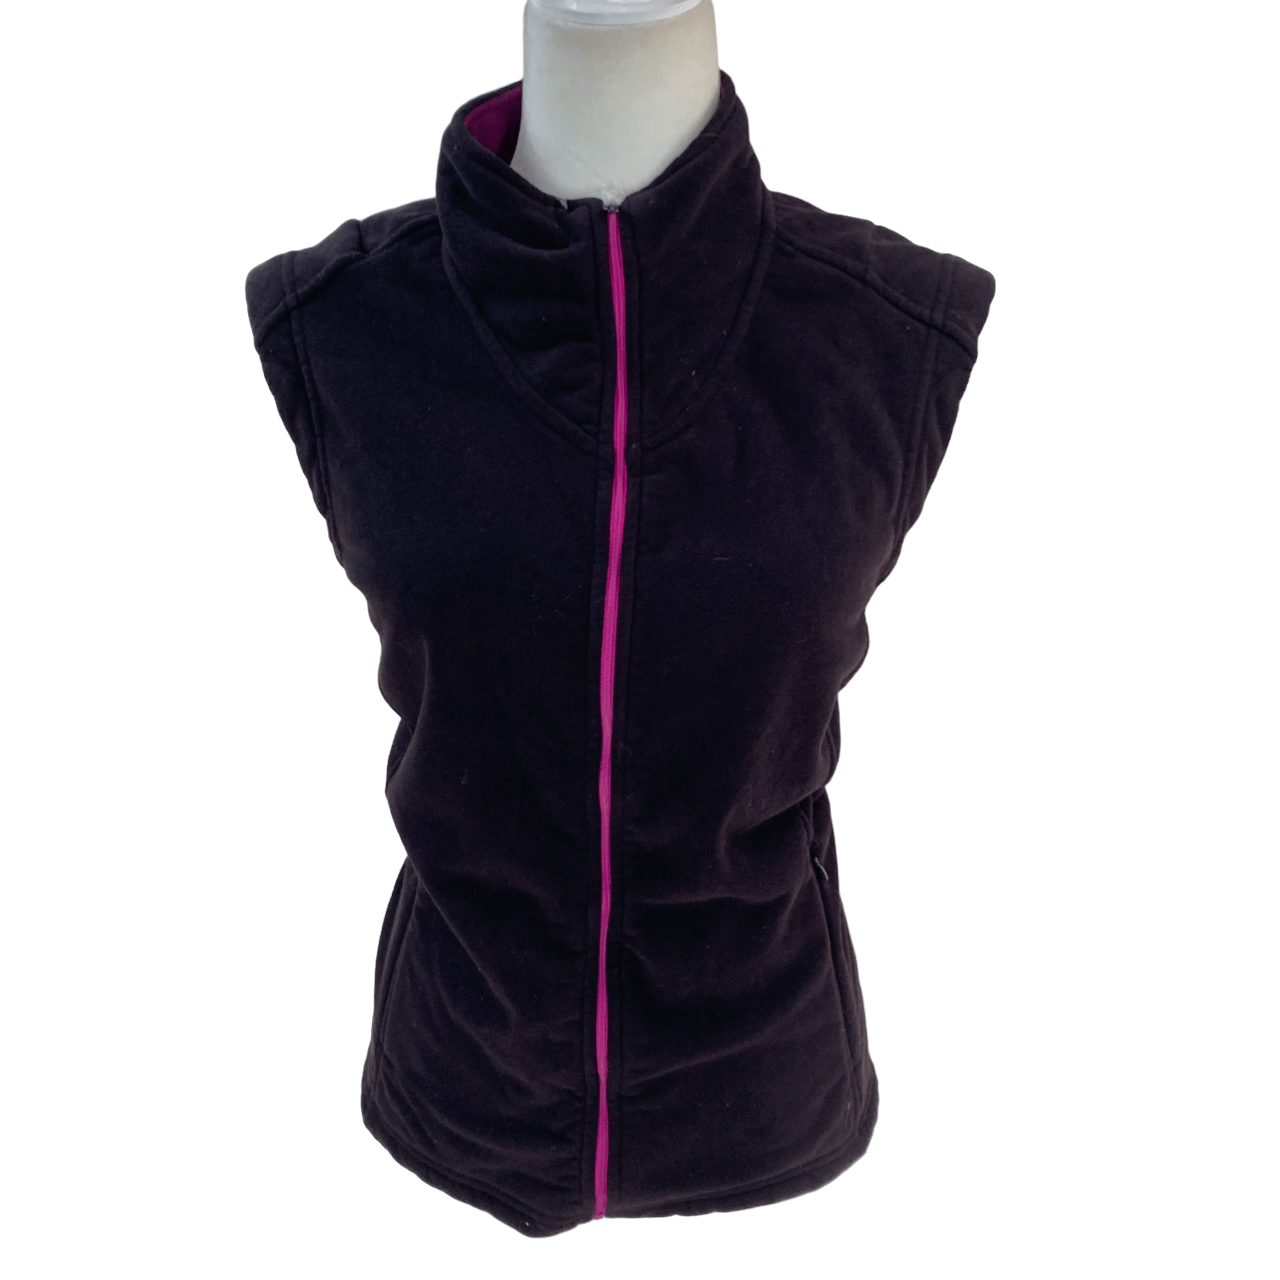 Irideon Fleece Vest in Black / Purple - Woman's X-Large